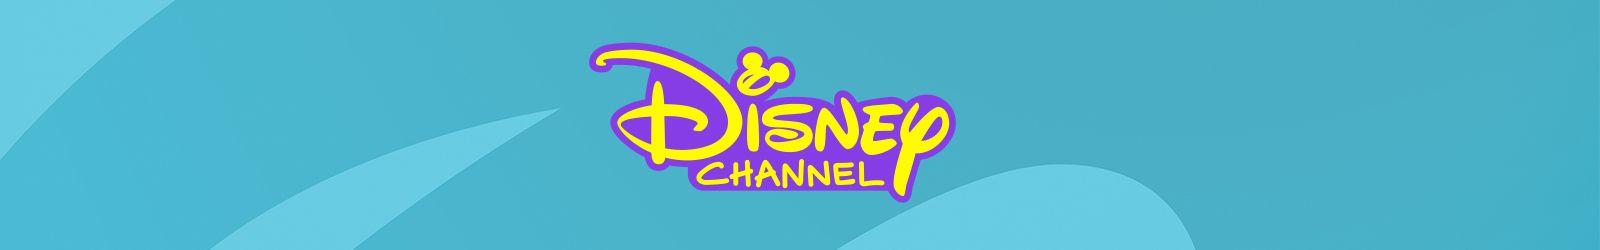 Current Disney Channel Logo - DC TV Schedule. Disney TV Shows